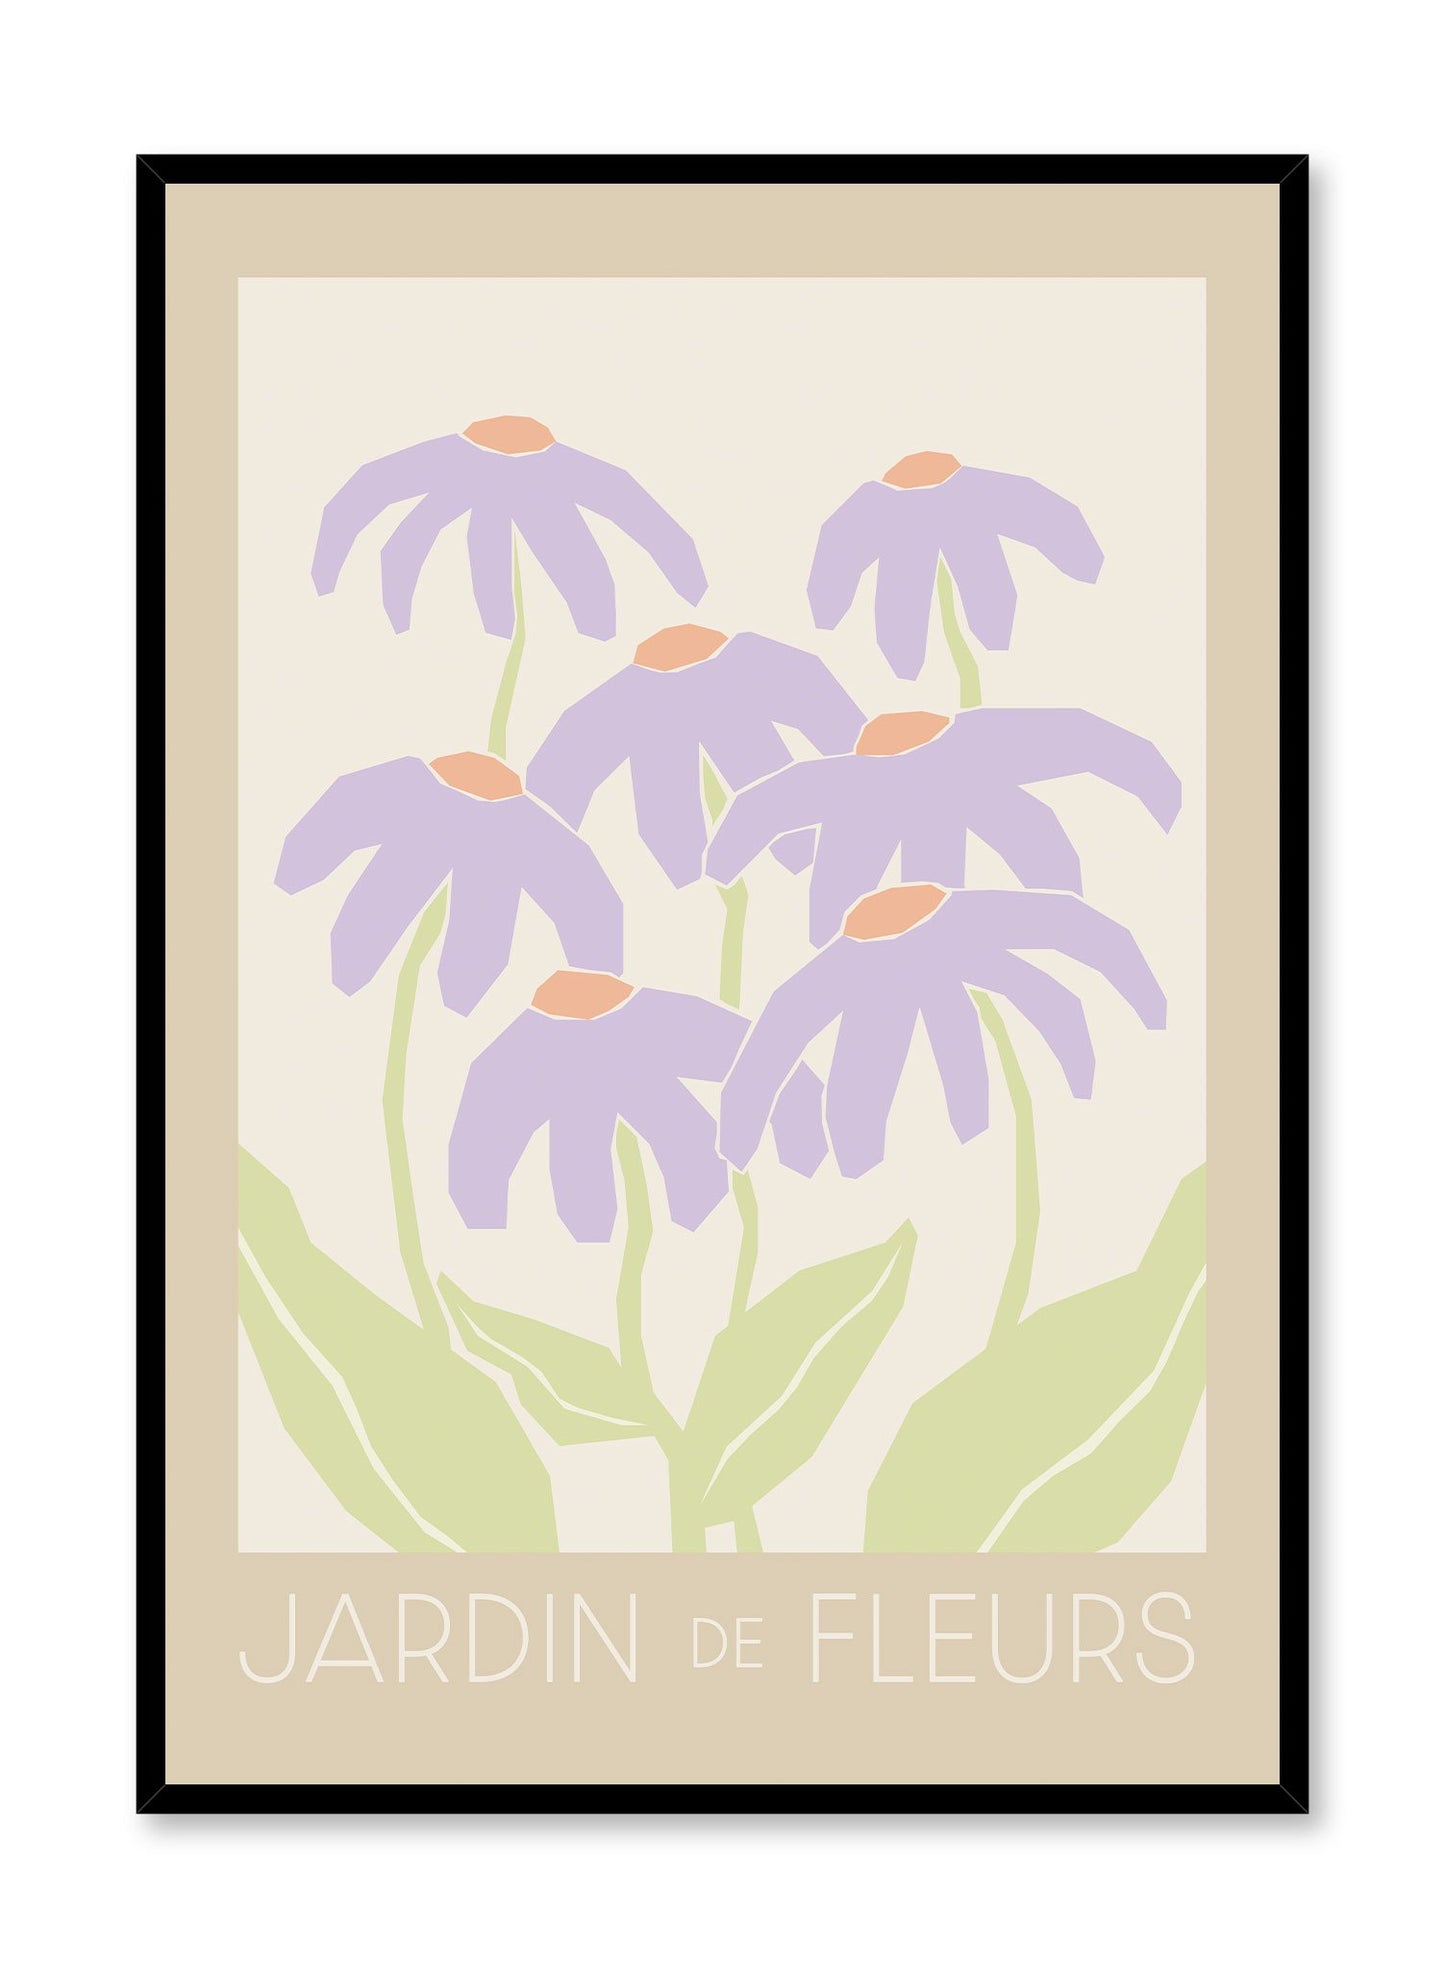 Joyful is a vector illustration of seven purple autumn daisies by Opposite Wall.